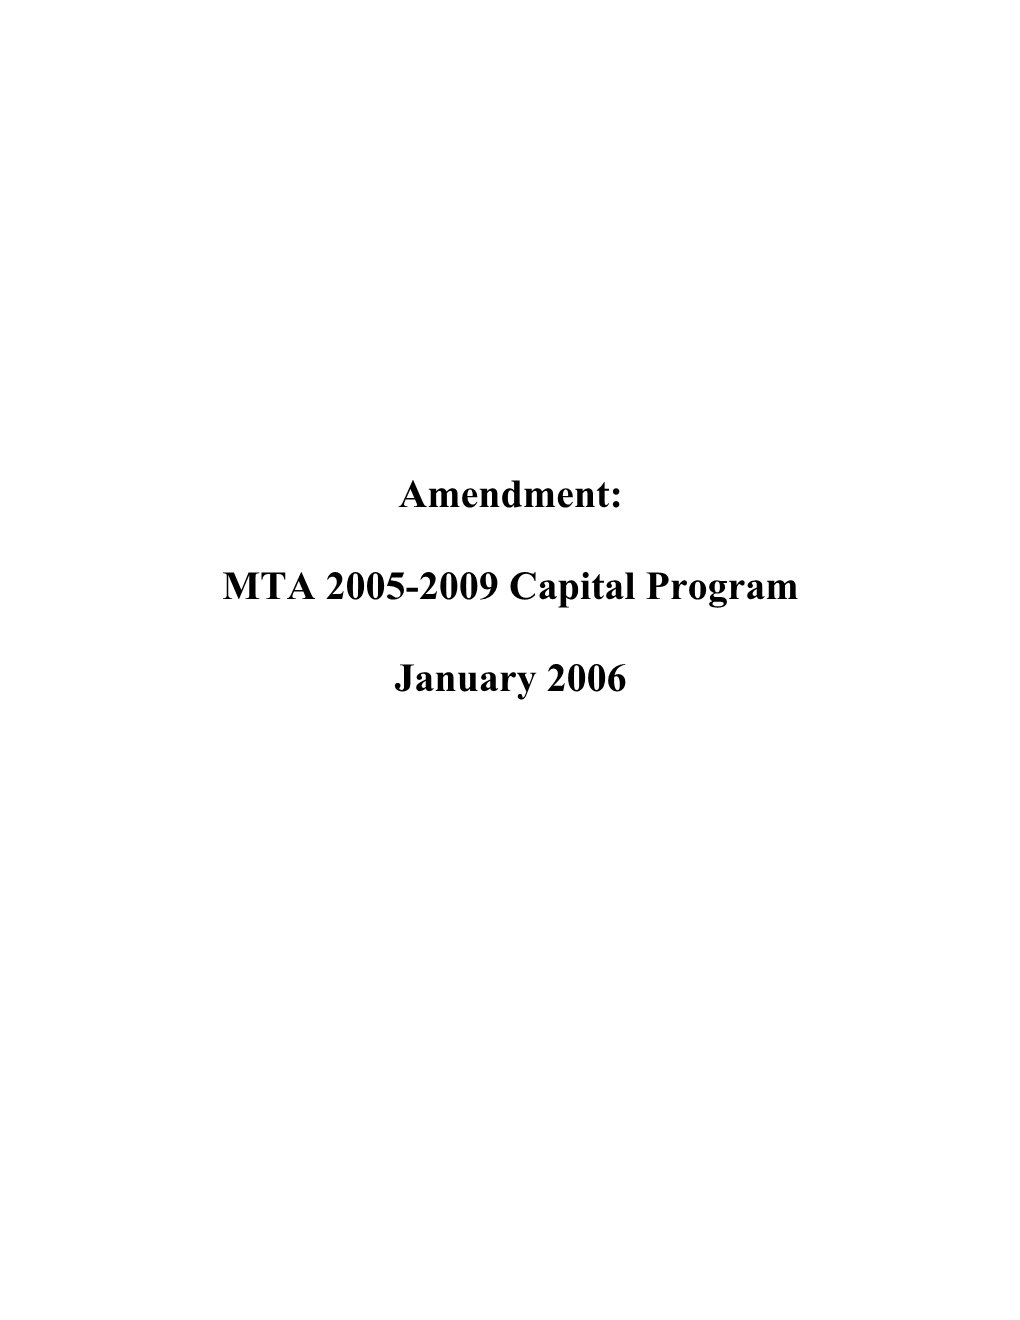 Amendment: MTA 2005-2009 Capital Program January 2006